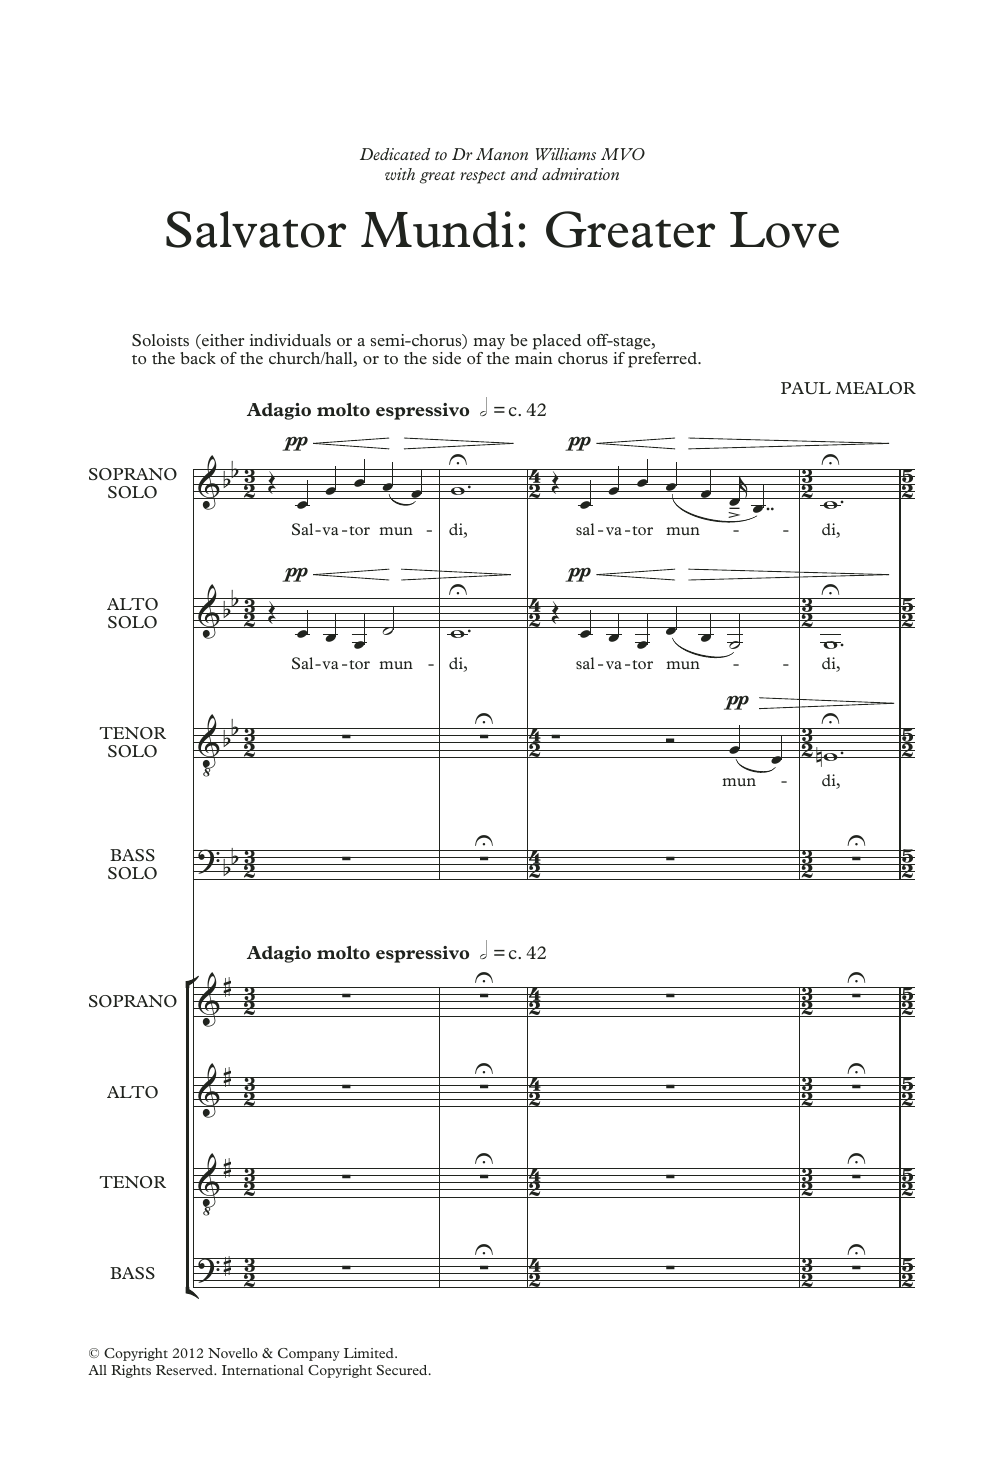 Paul Mealor Salvator Mundi: Greater Love Sheet Music Notes & Chords for SATB Choir - Download or Print PDF